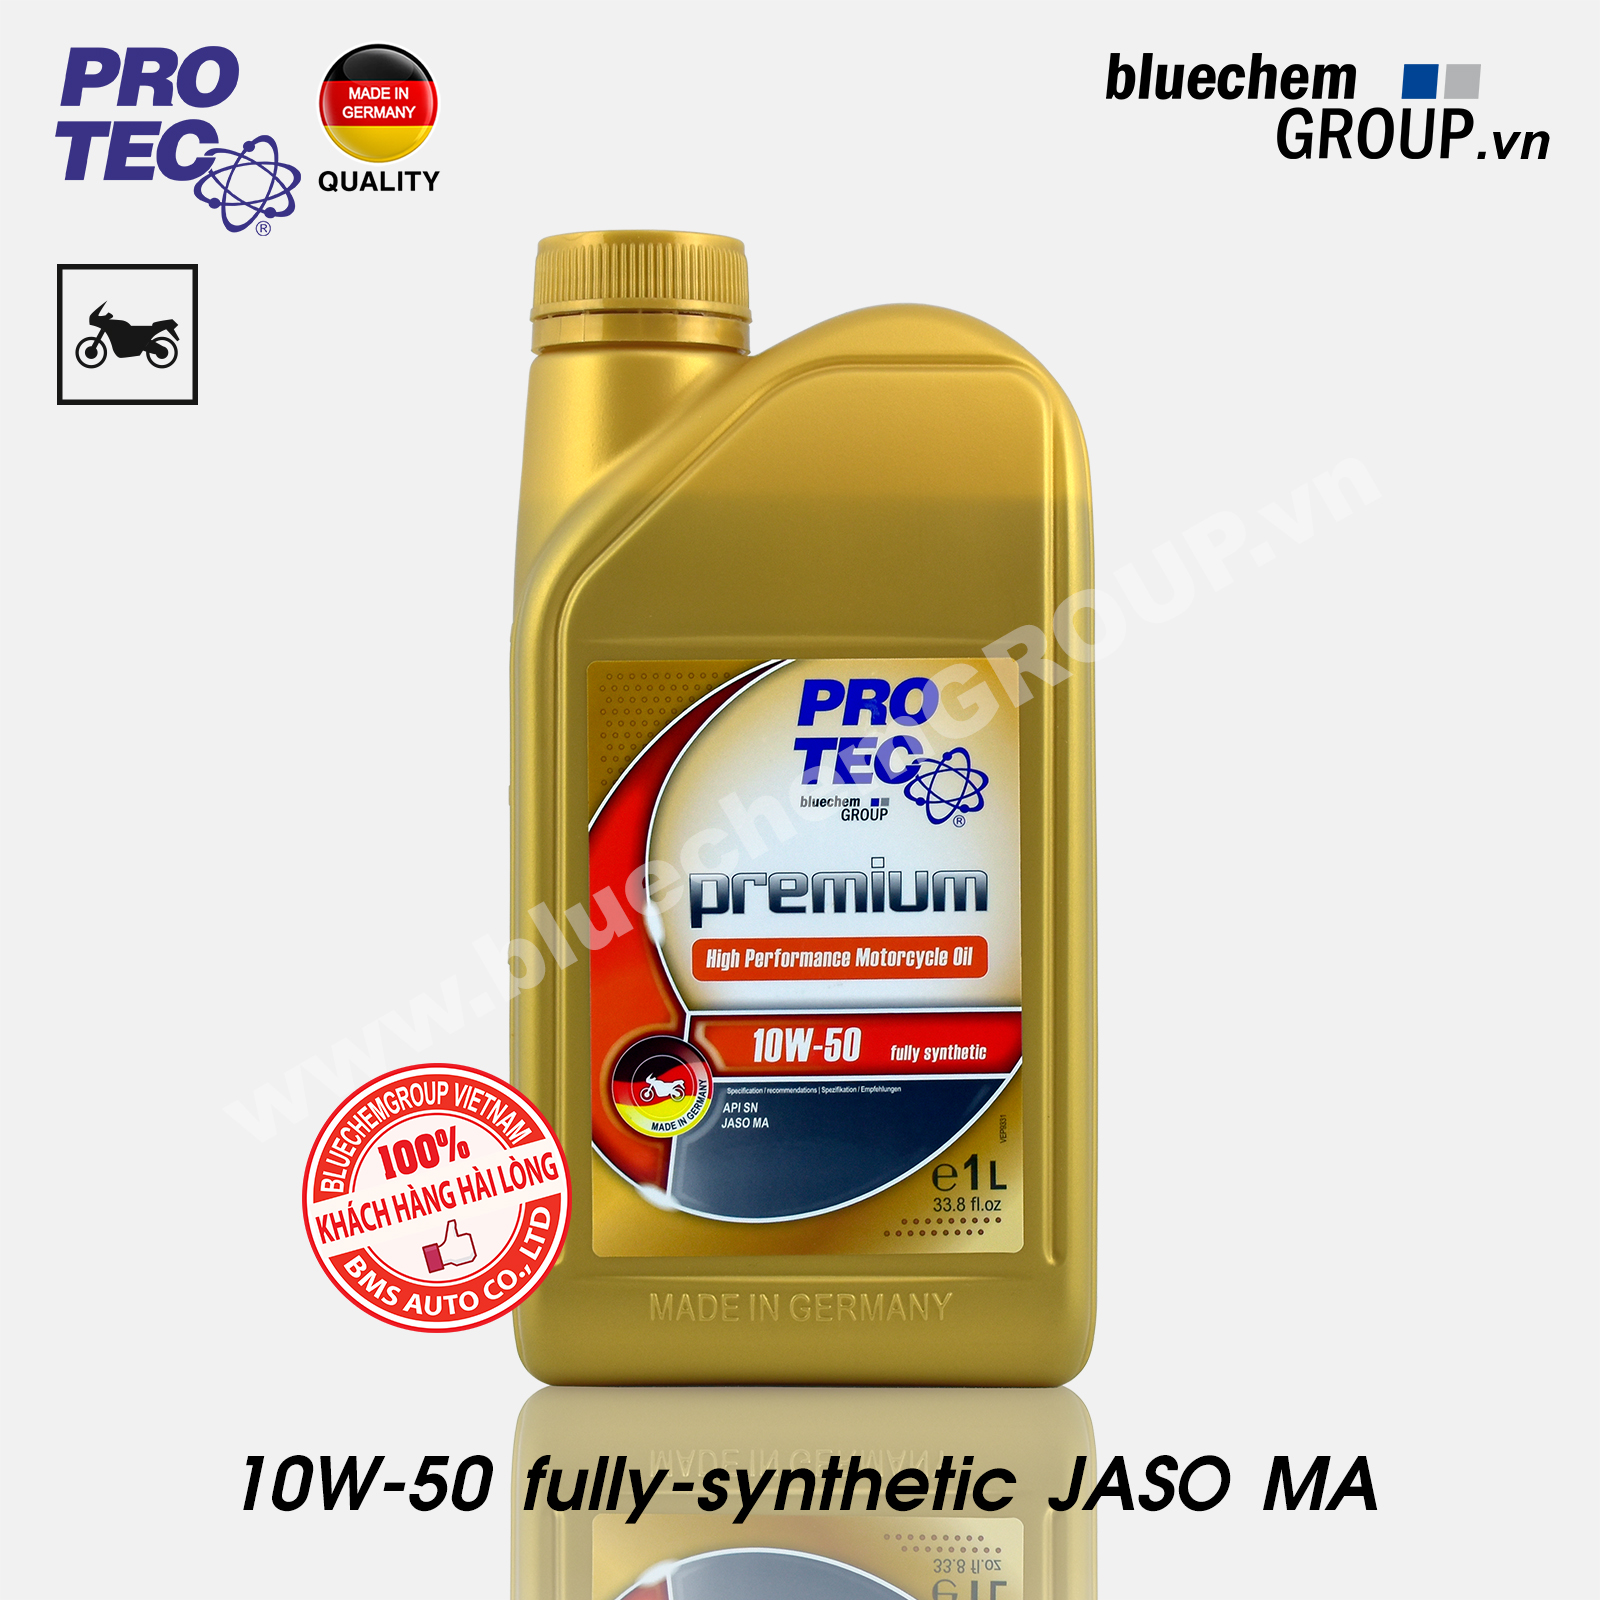 Dầu nhớt Mô tô hiệu suất cao bluechem PRO-TEC Premium 10W-50 Fully-synthetic JASO MA